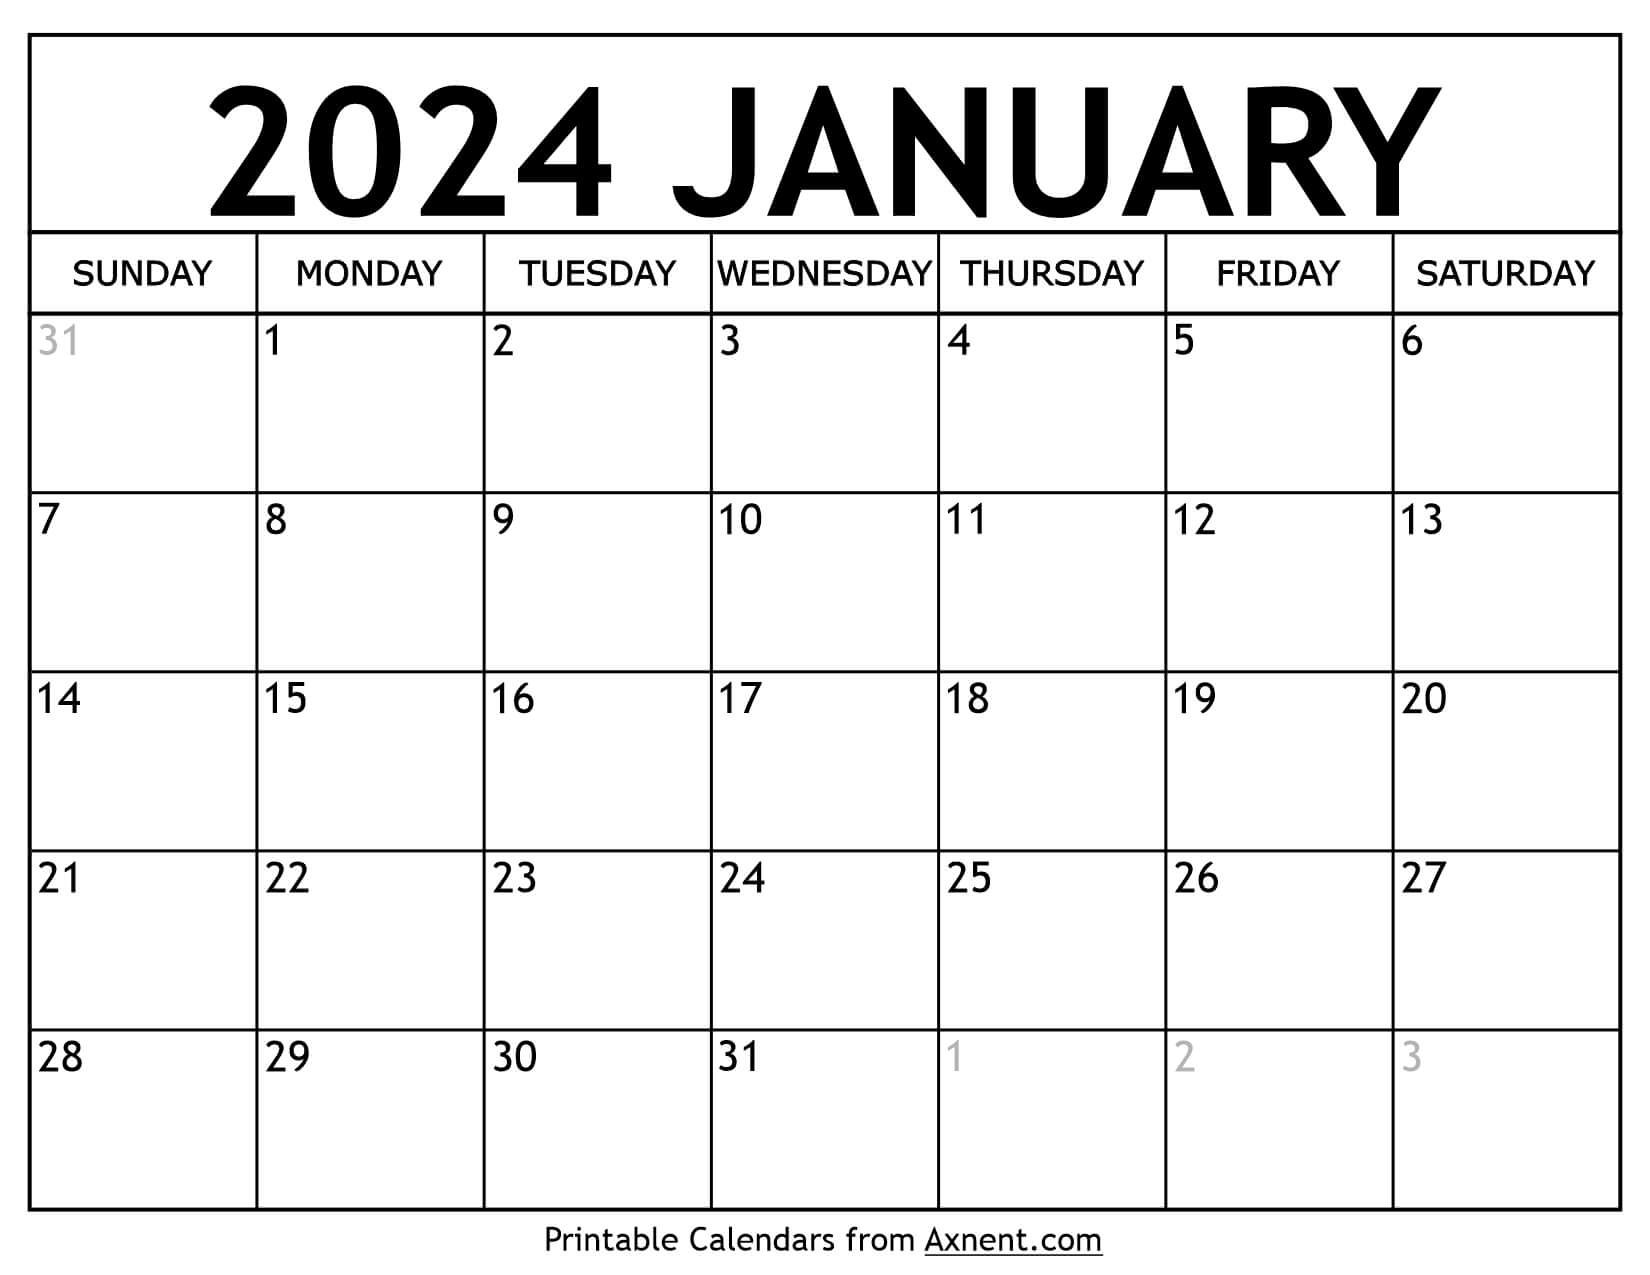 Printable January 2024 Calendar Template - Print Now for Free Jan 2024 Printable Calendar